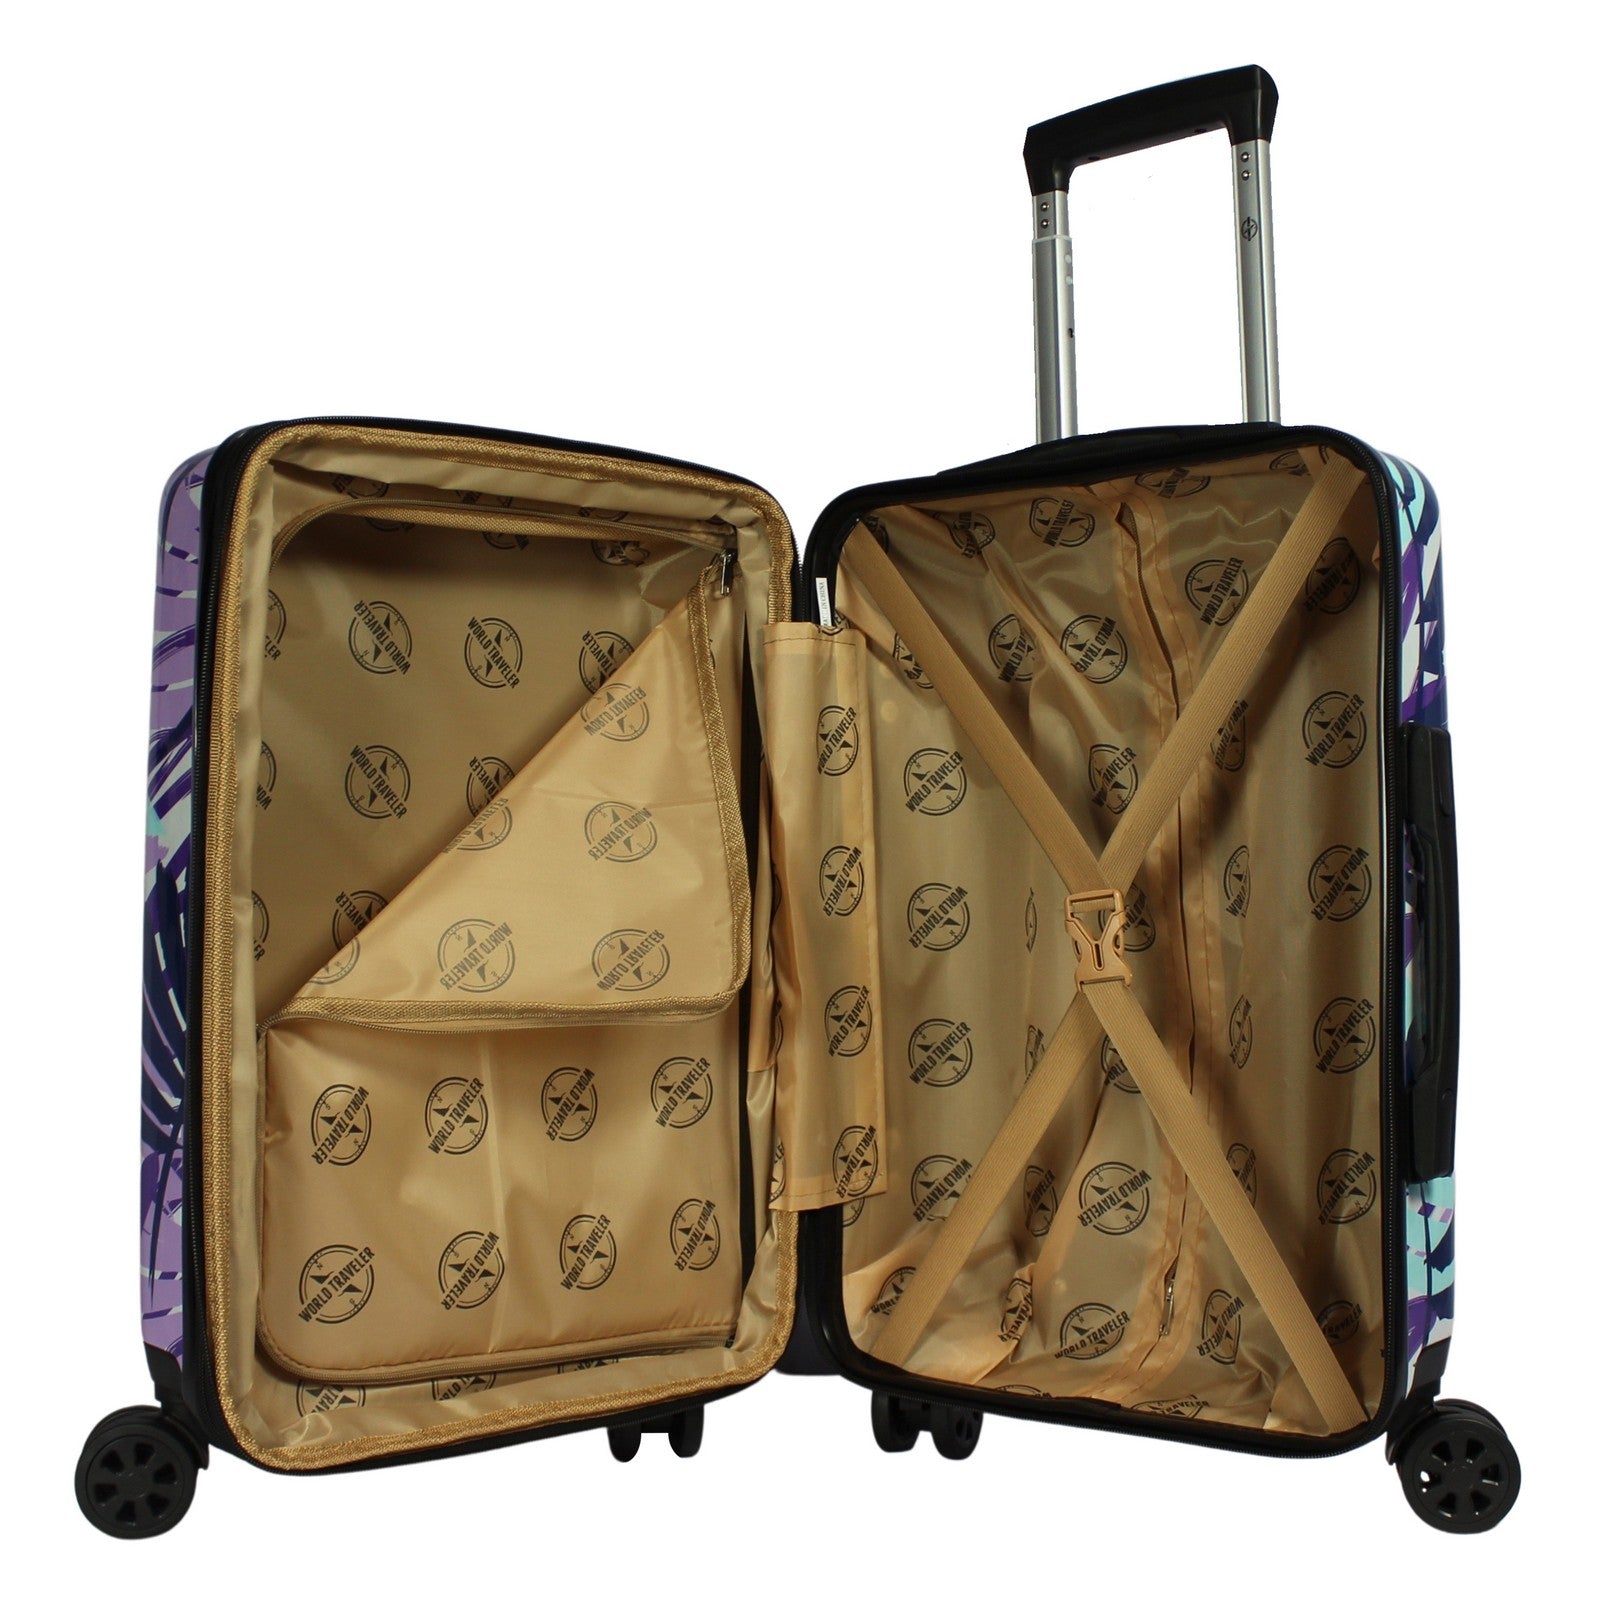 RESTOCK][Lucky Planet] Cactus Pattern Print Hard Case Luggage Set